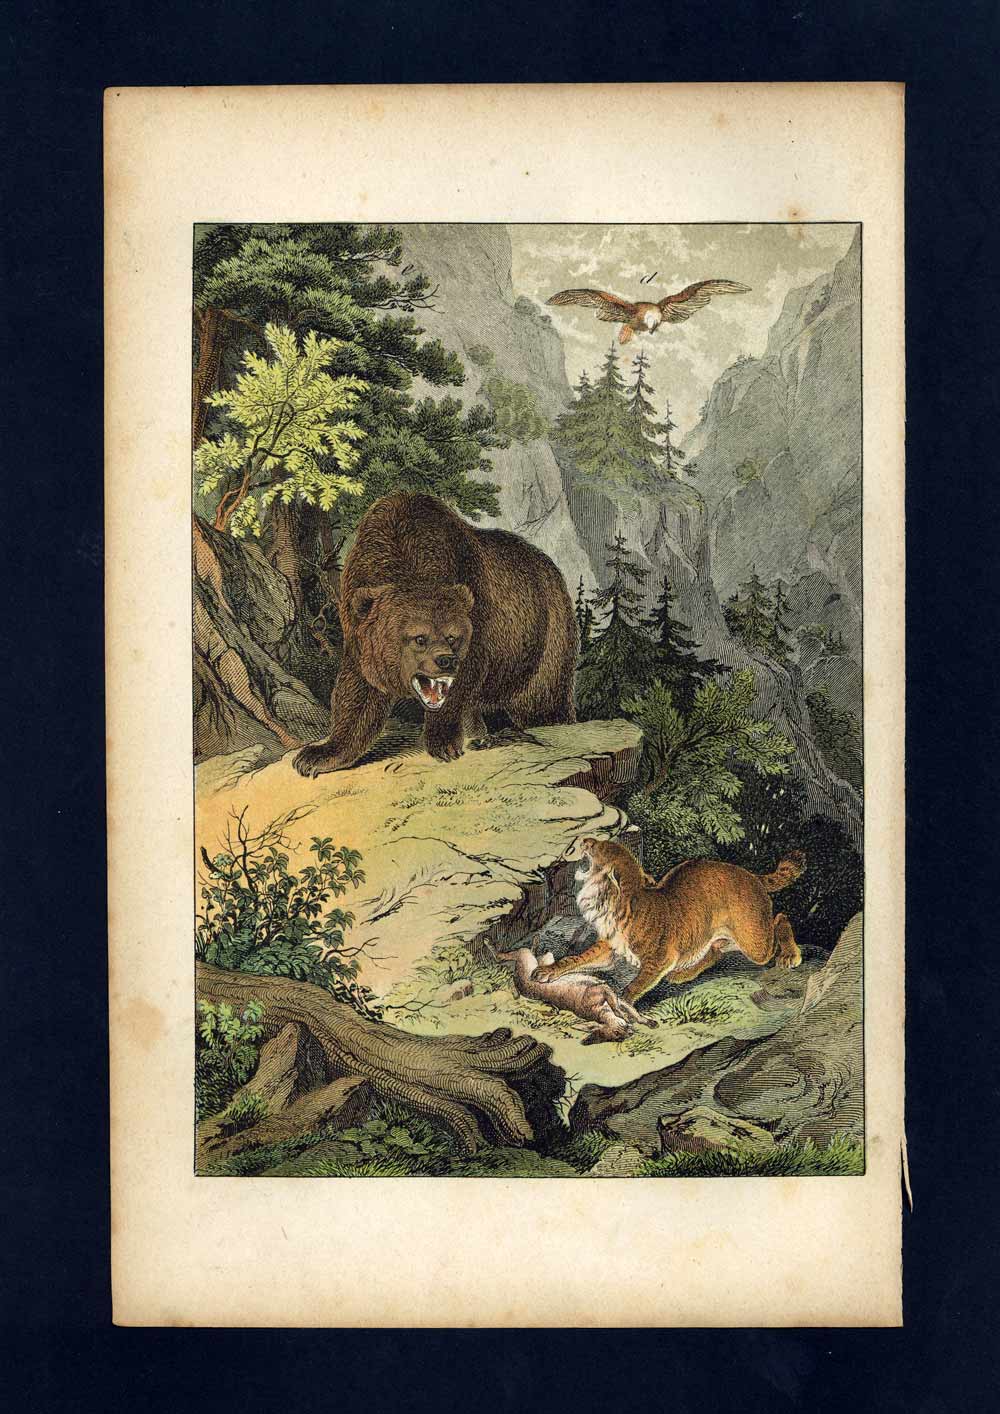 CANADA, ROCKY GRAY BEAR, LYNX engraving illustration from 1880 